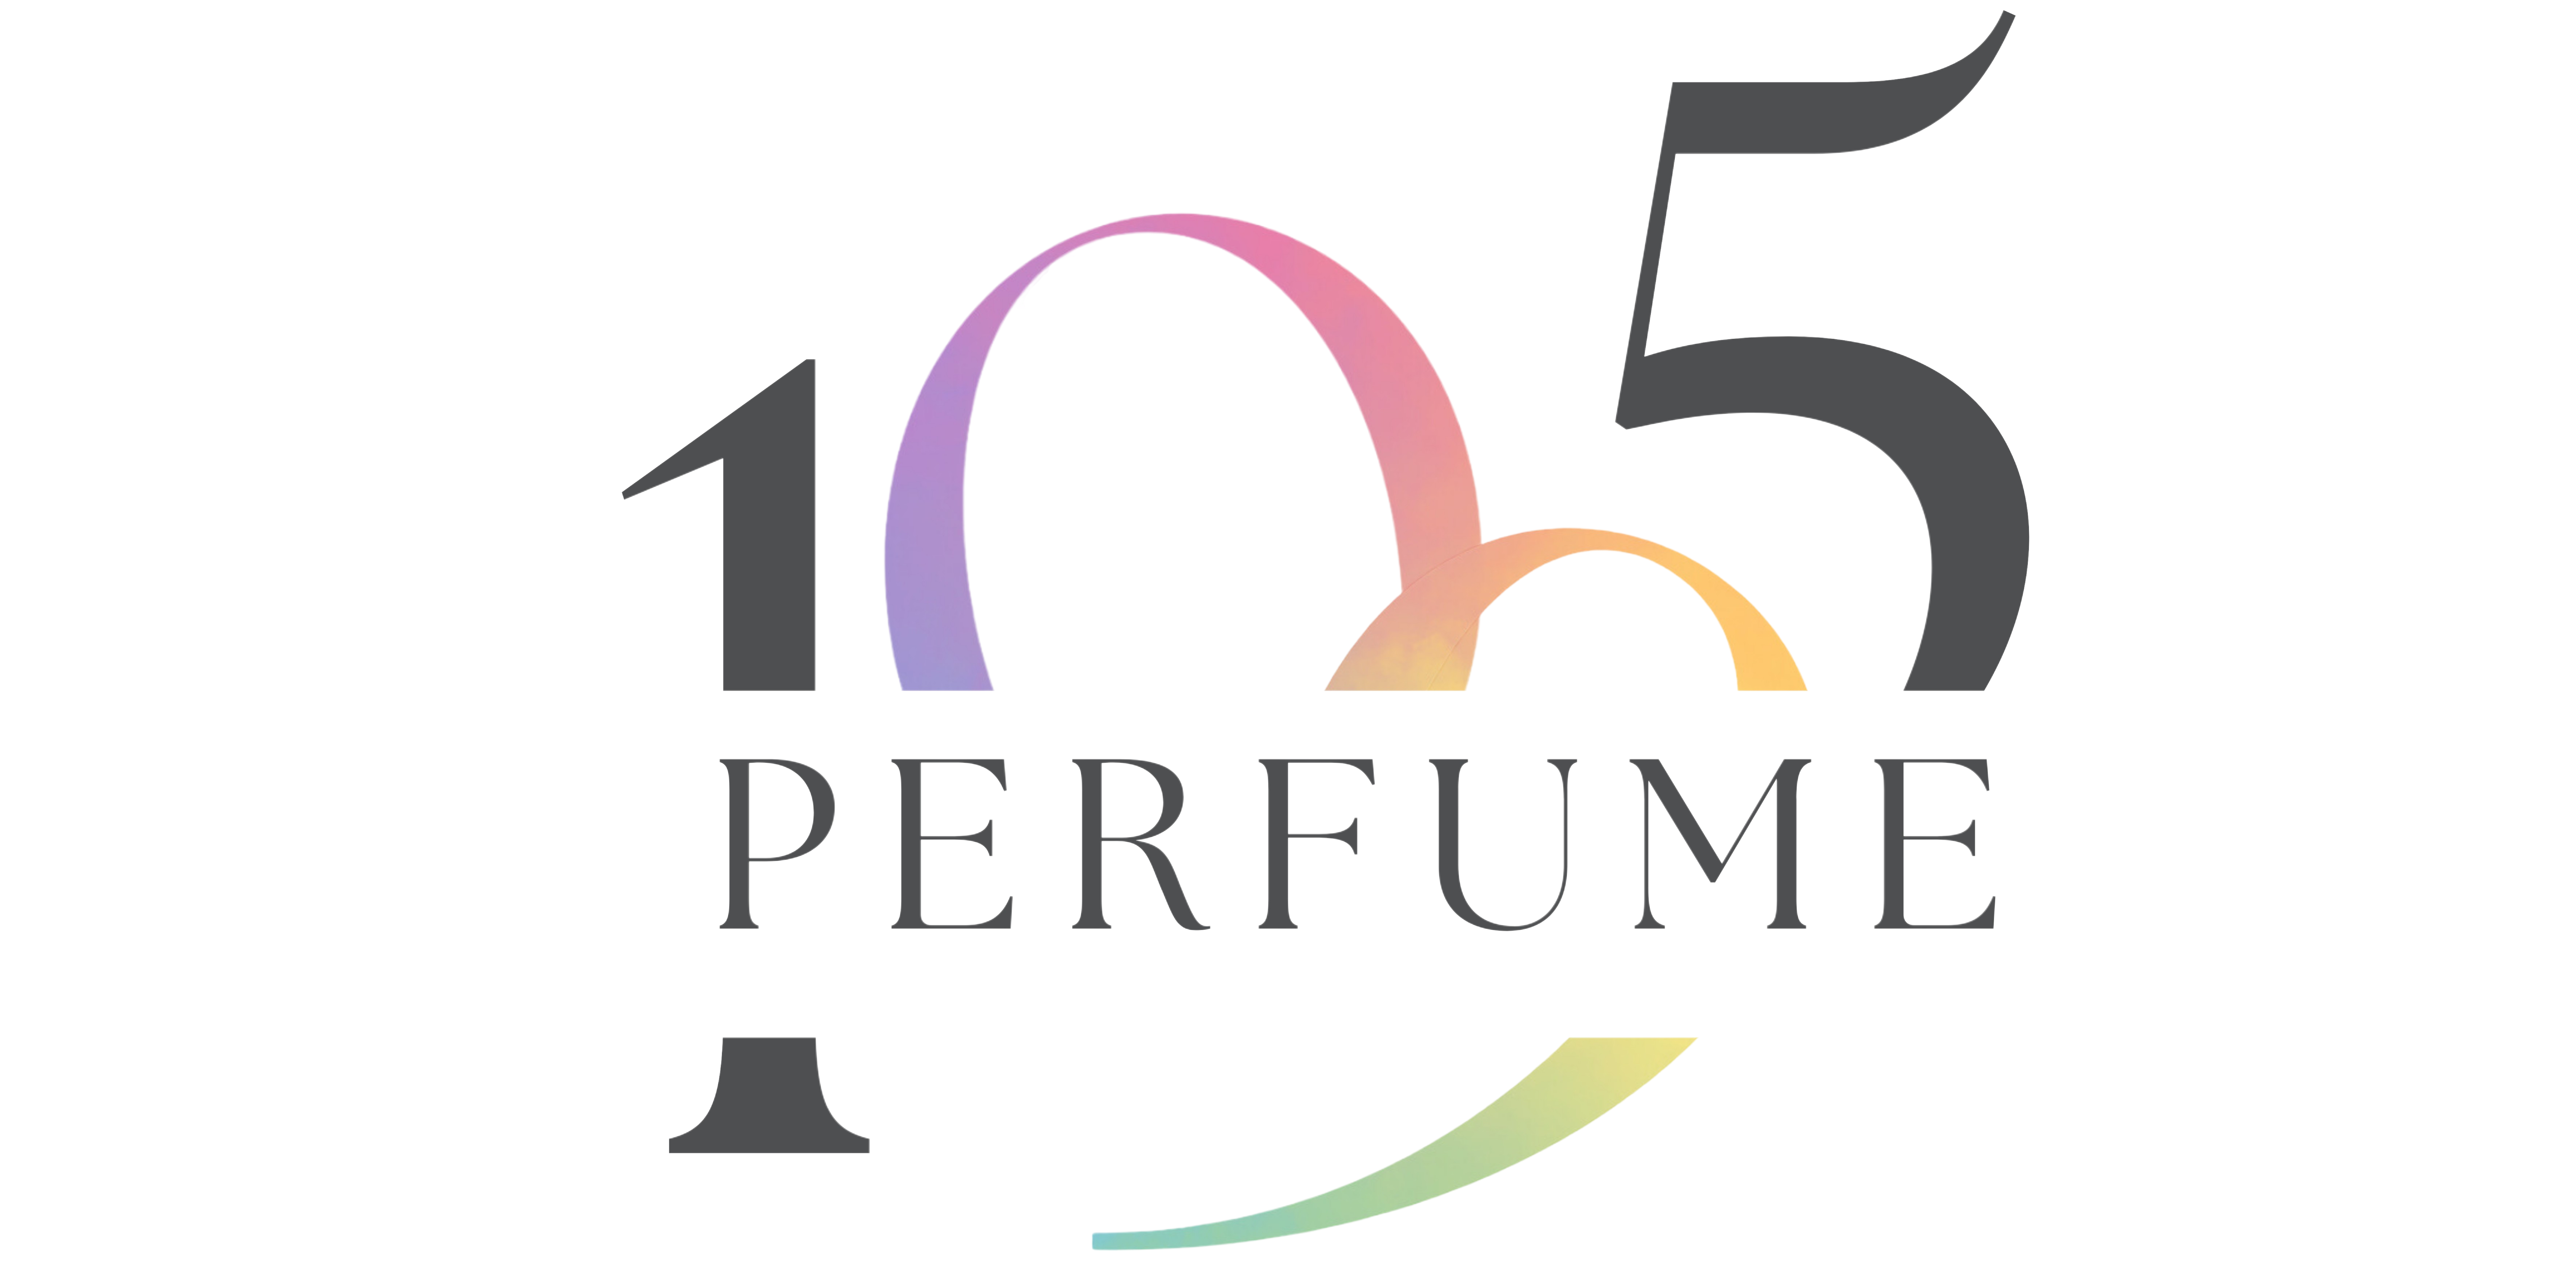 1095 perfume